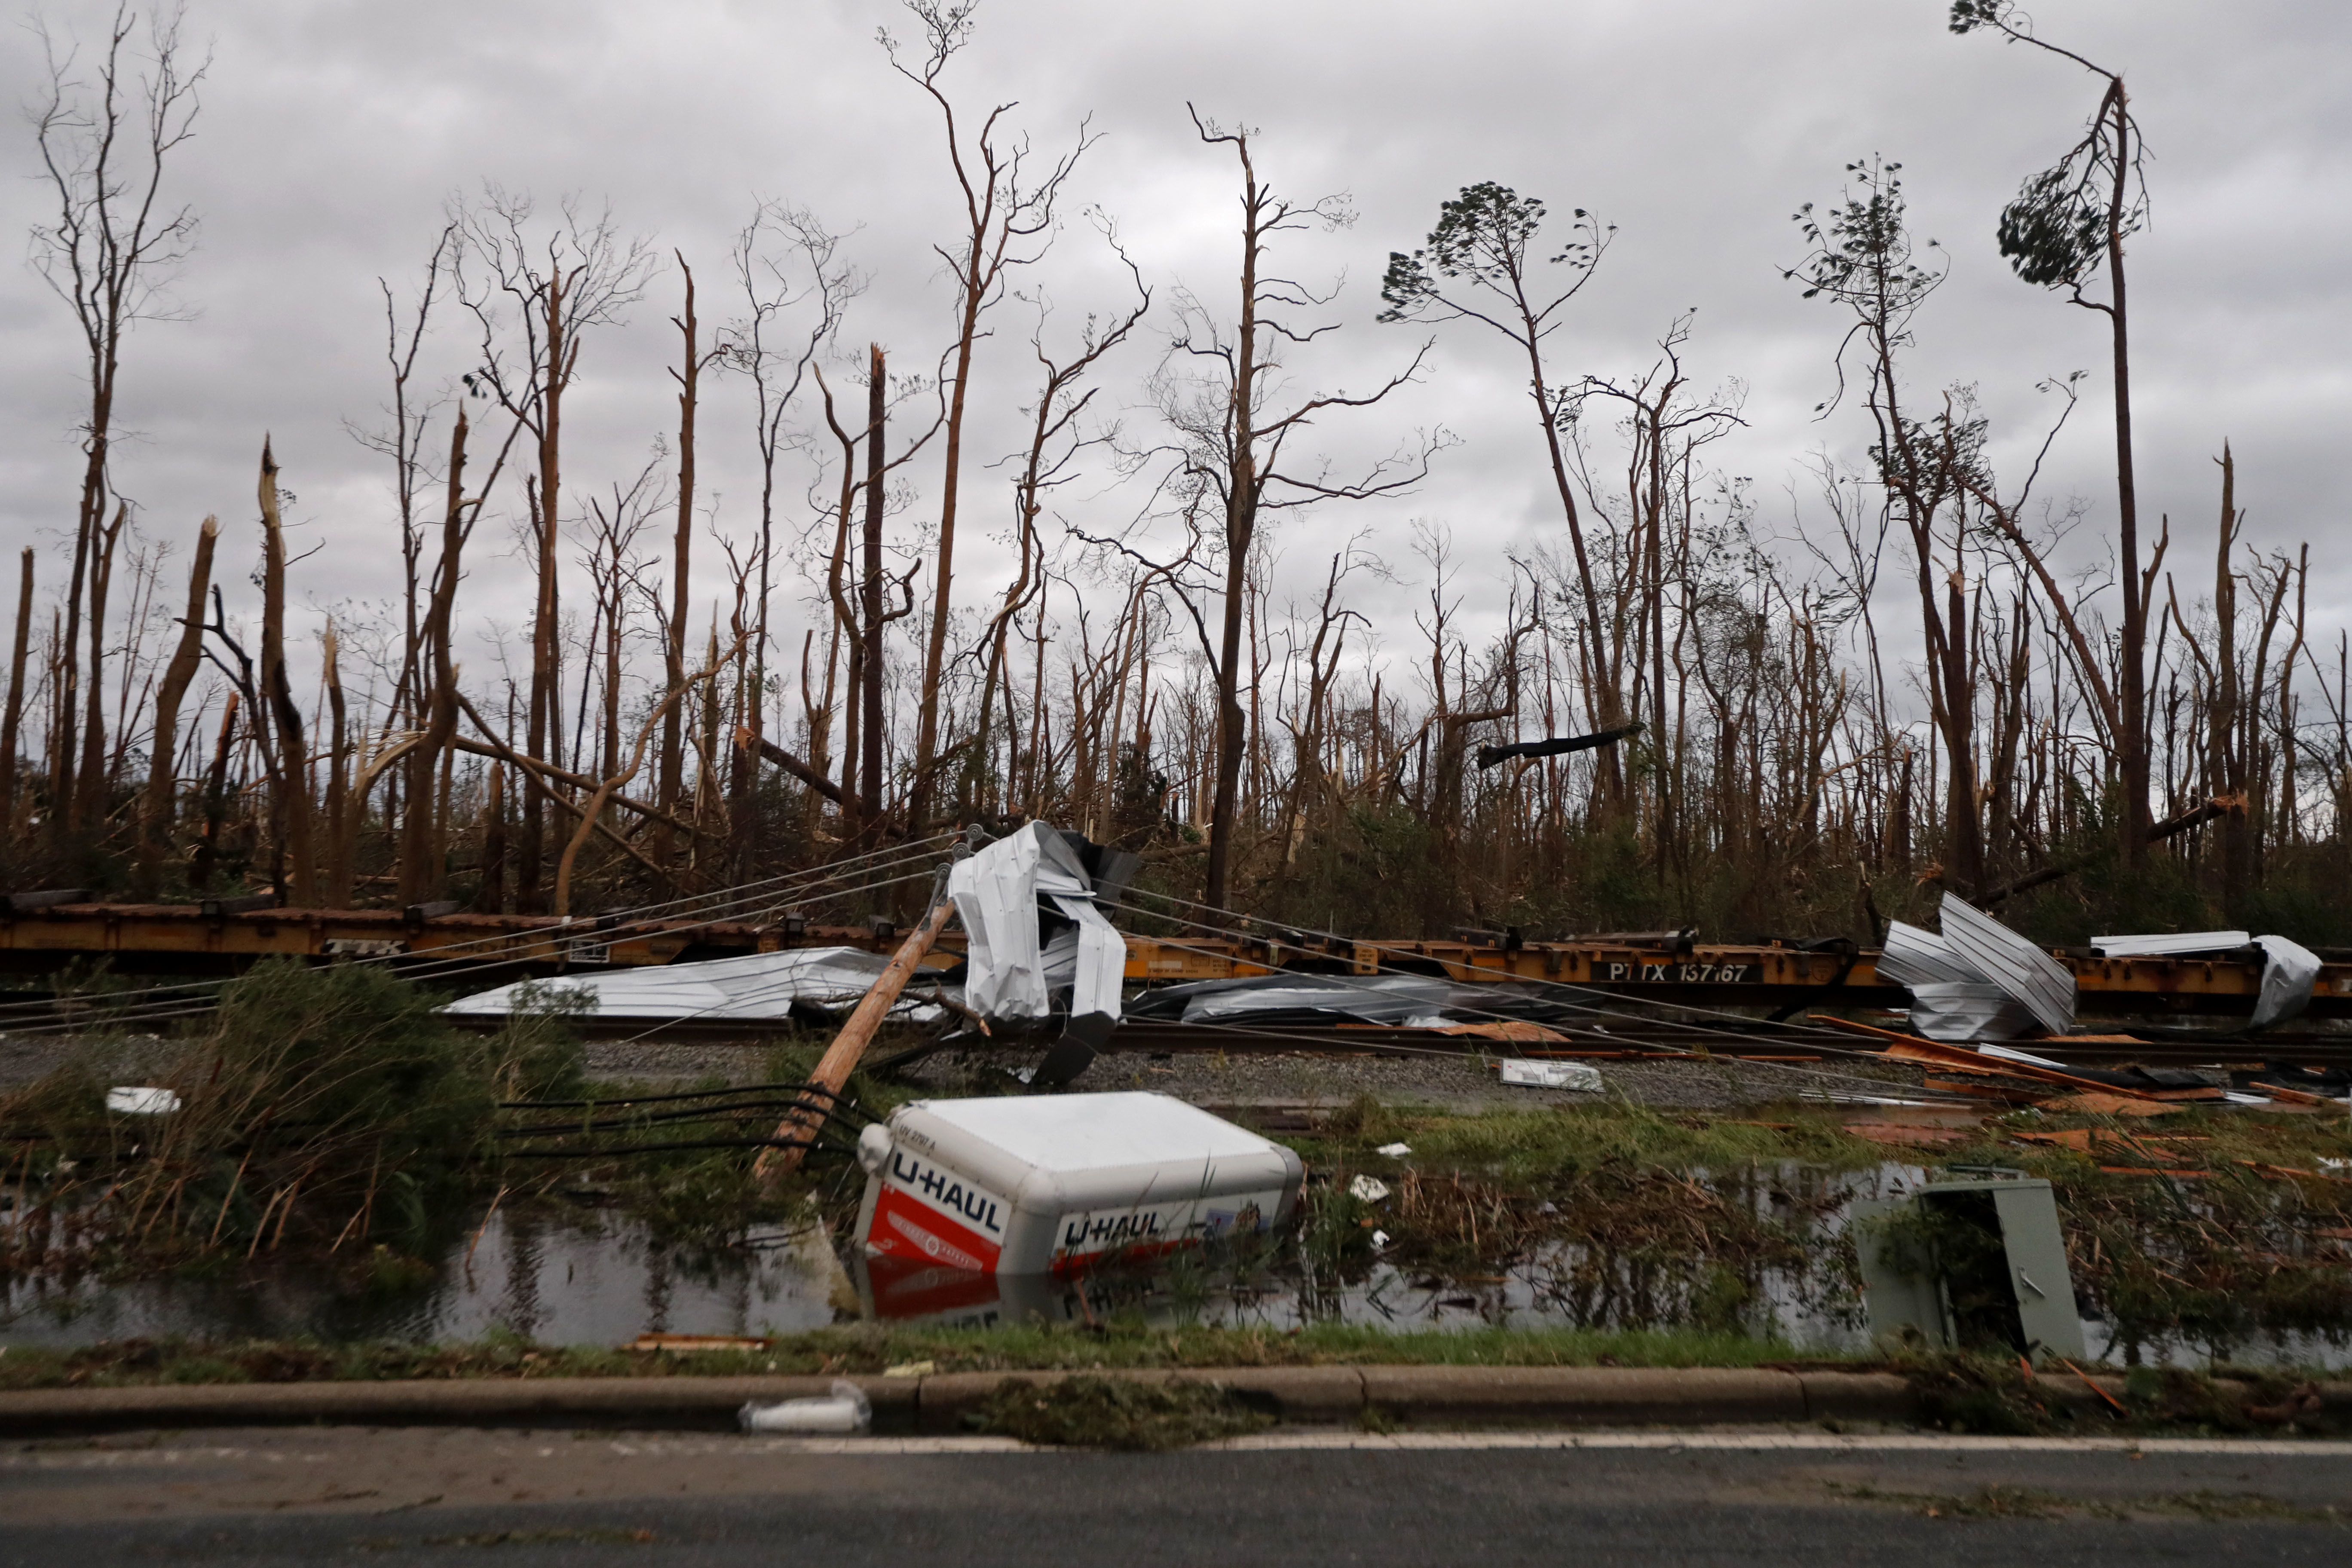 Stunning Image Show Unimaginable Damage In The Wake Of Hurricane